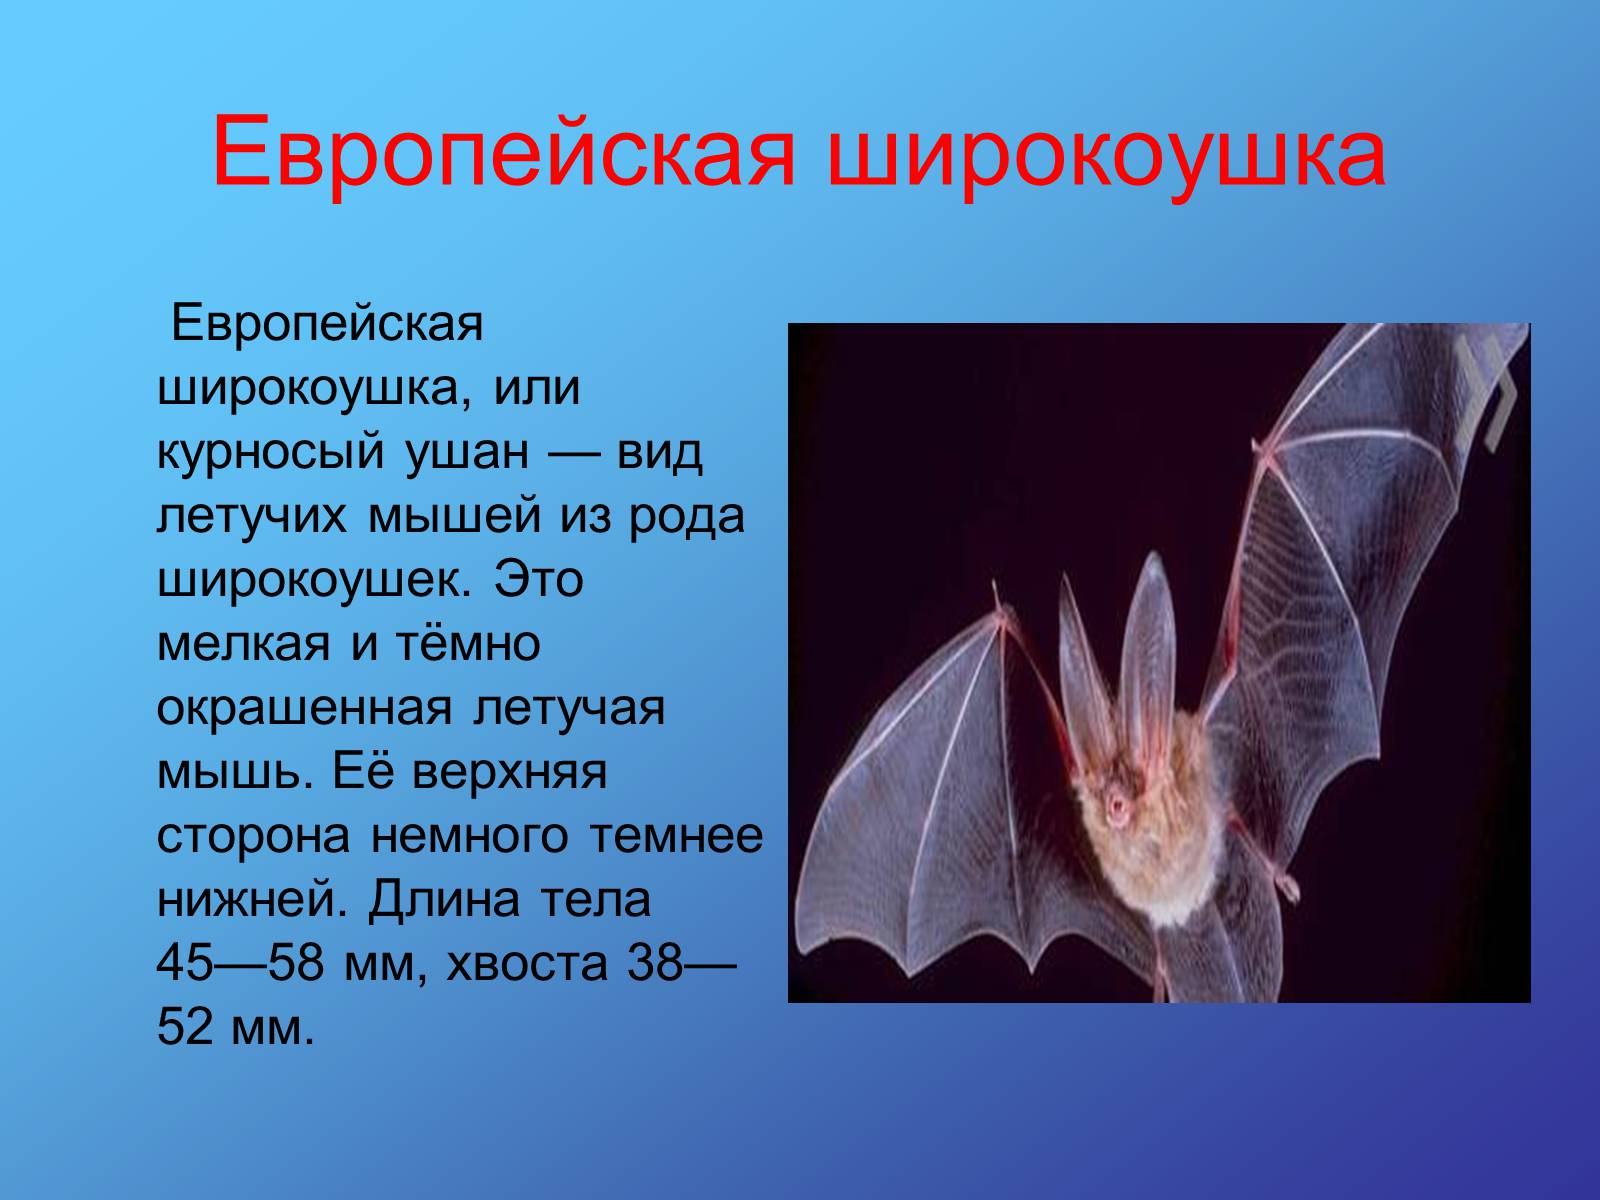 Презентація на тему «Красная книга Украины» (варіант 2) - Слайд #7